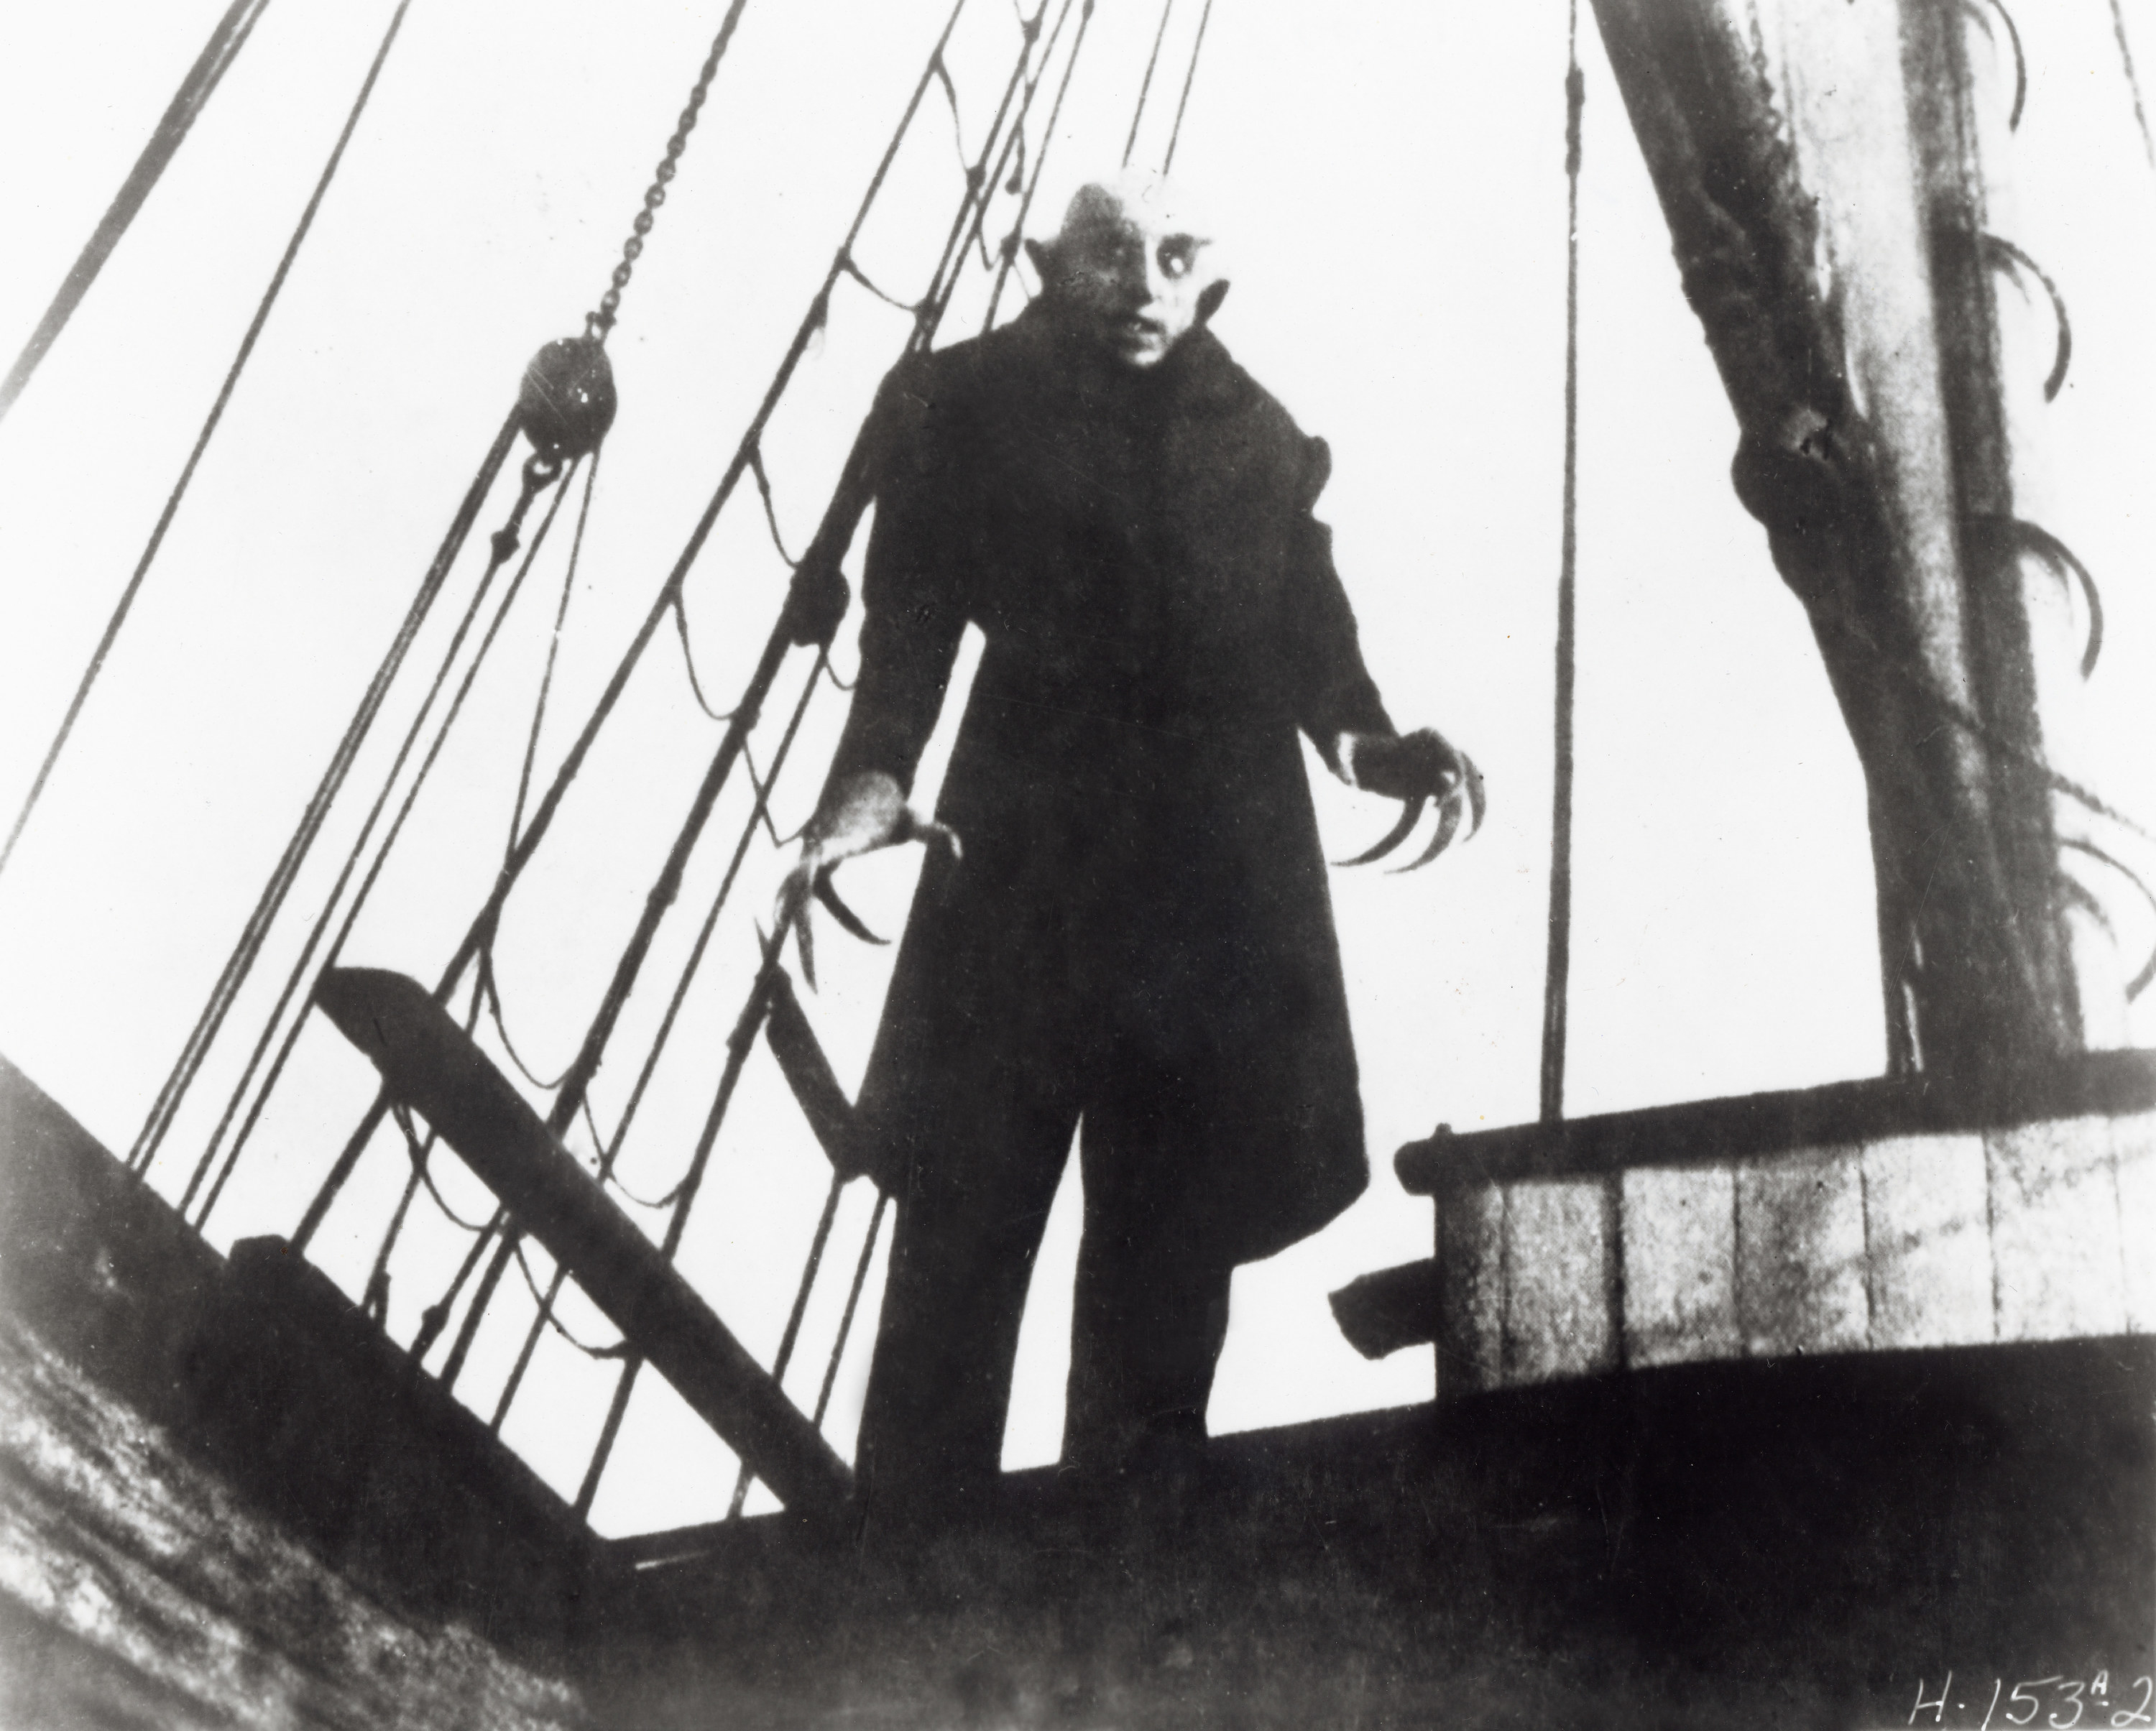 Nosferatu vampire stood on a boat